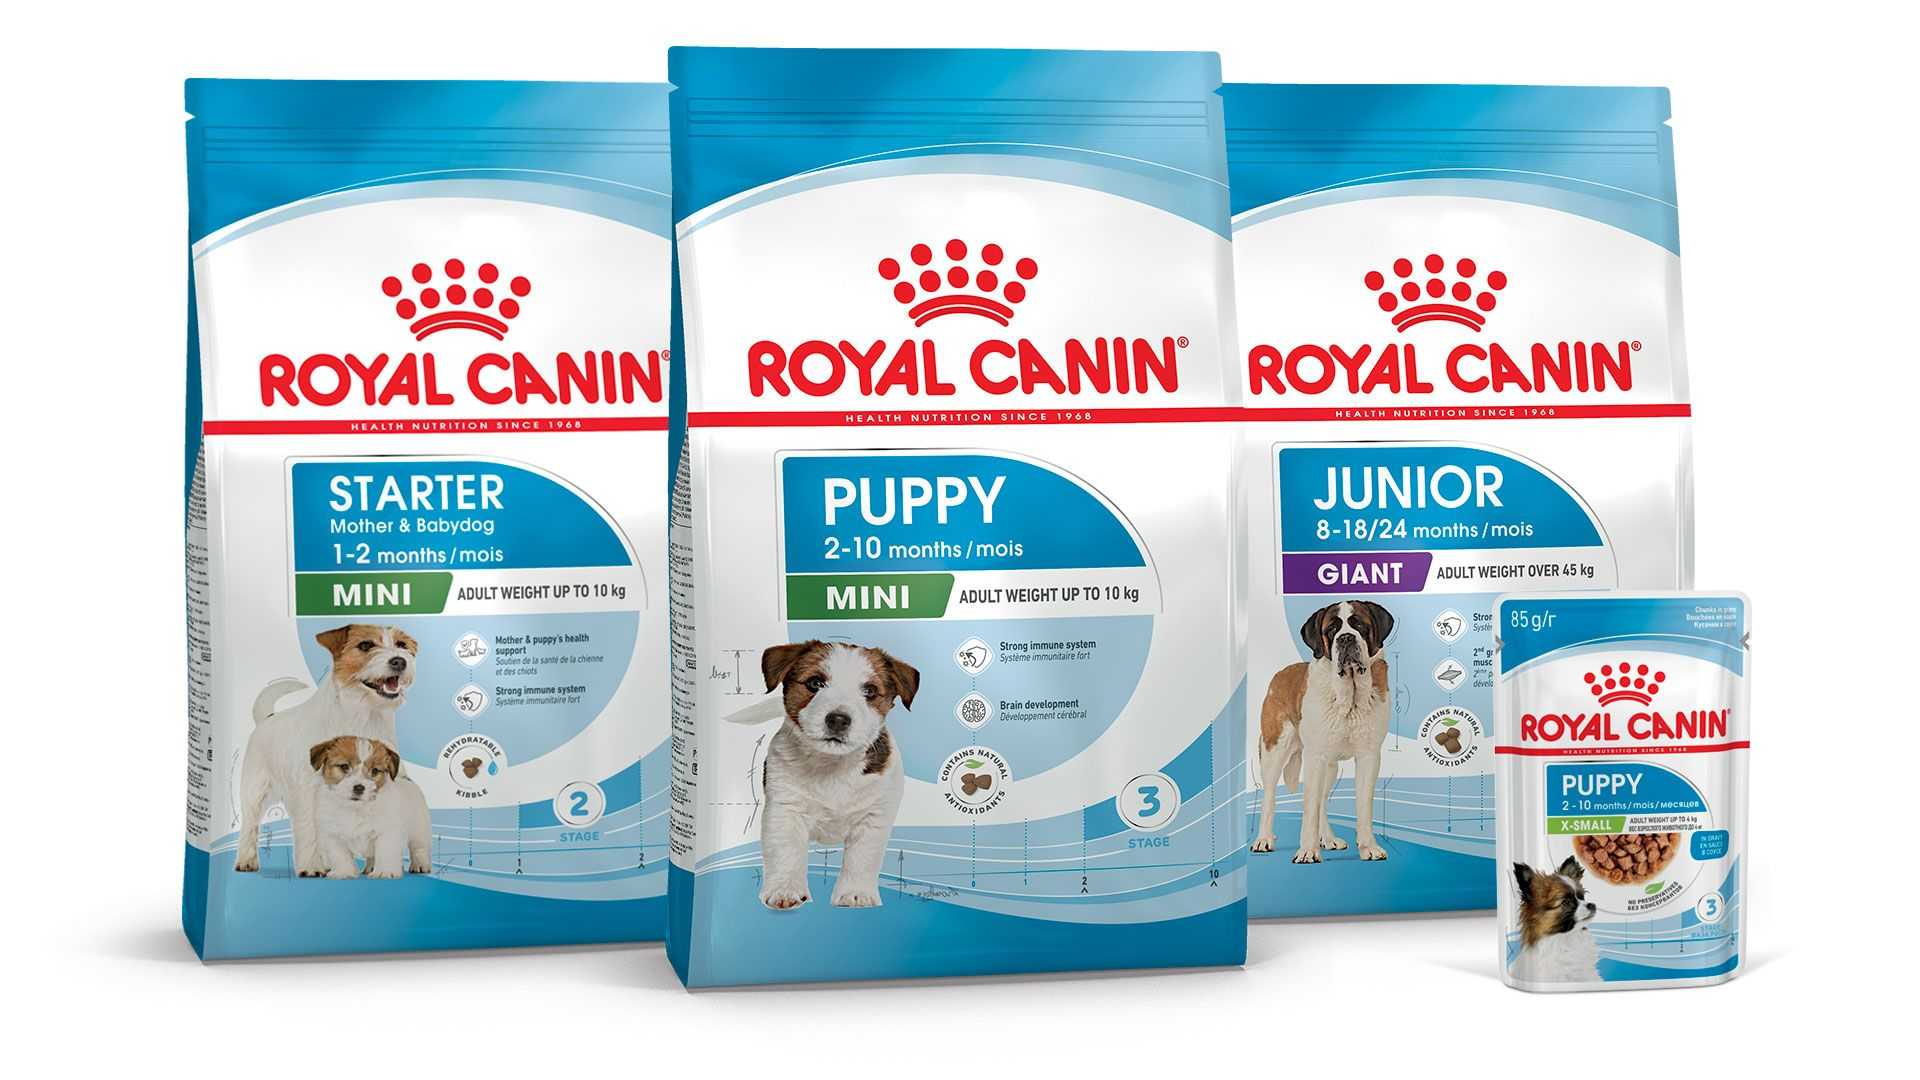 Royal Canin Puppy Growth Program range